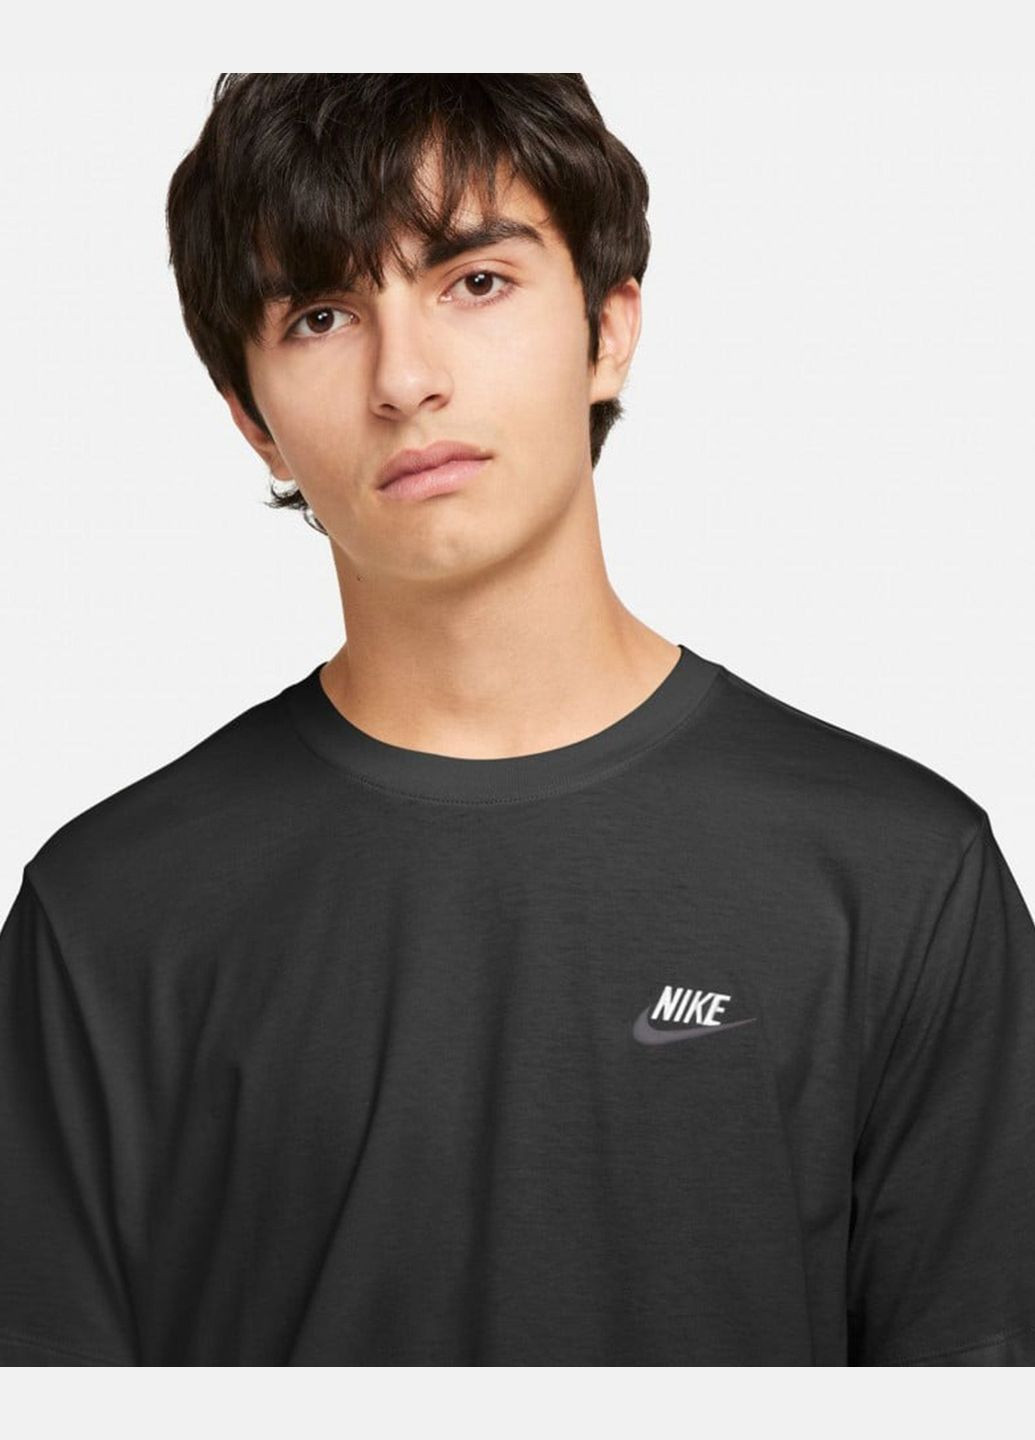 Черная мужская футболка portswear club ar4997-014 черная Nike